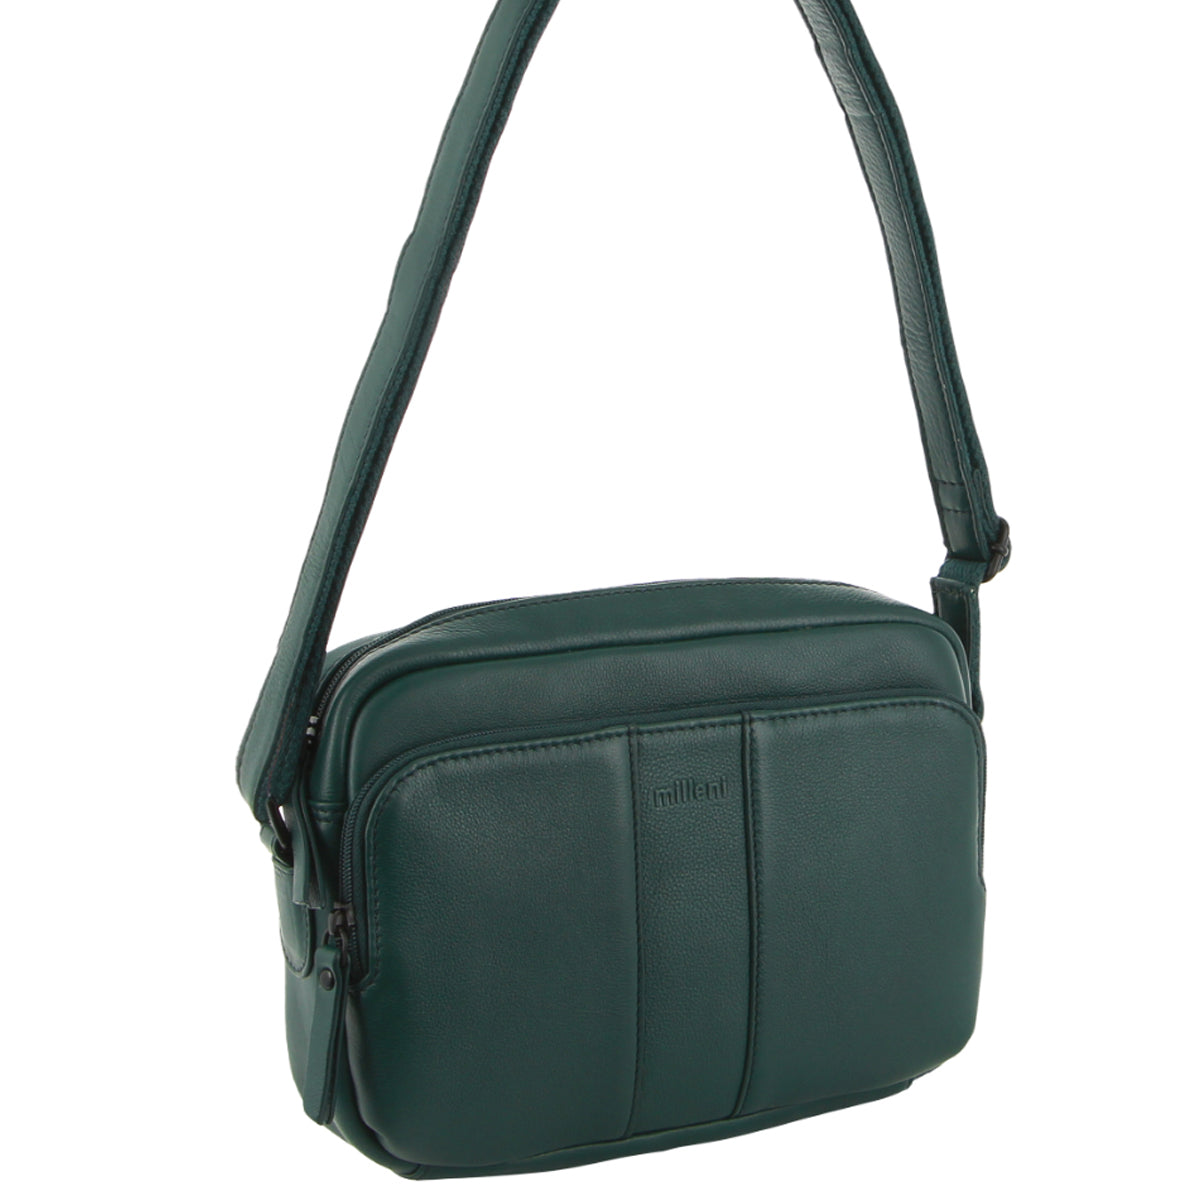 Milleni - NL3871 Small leather sidebag - Zircon-1